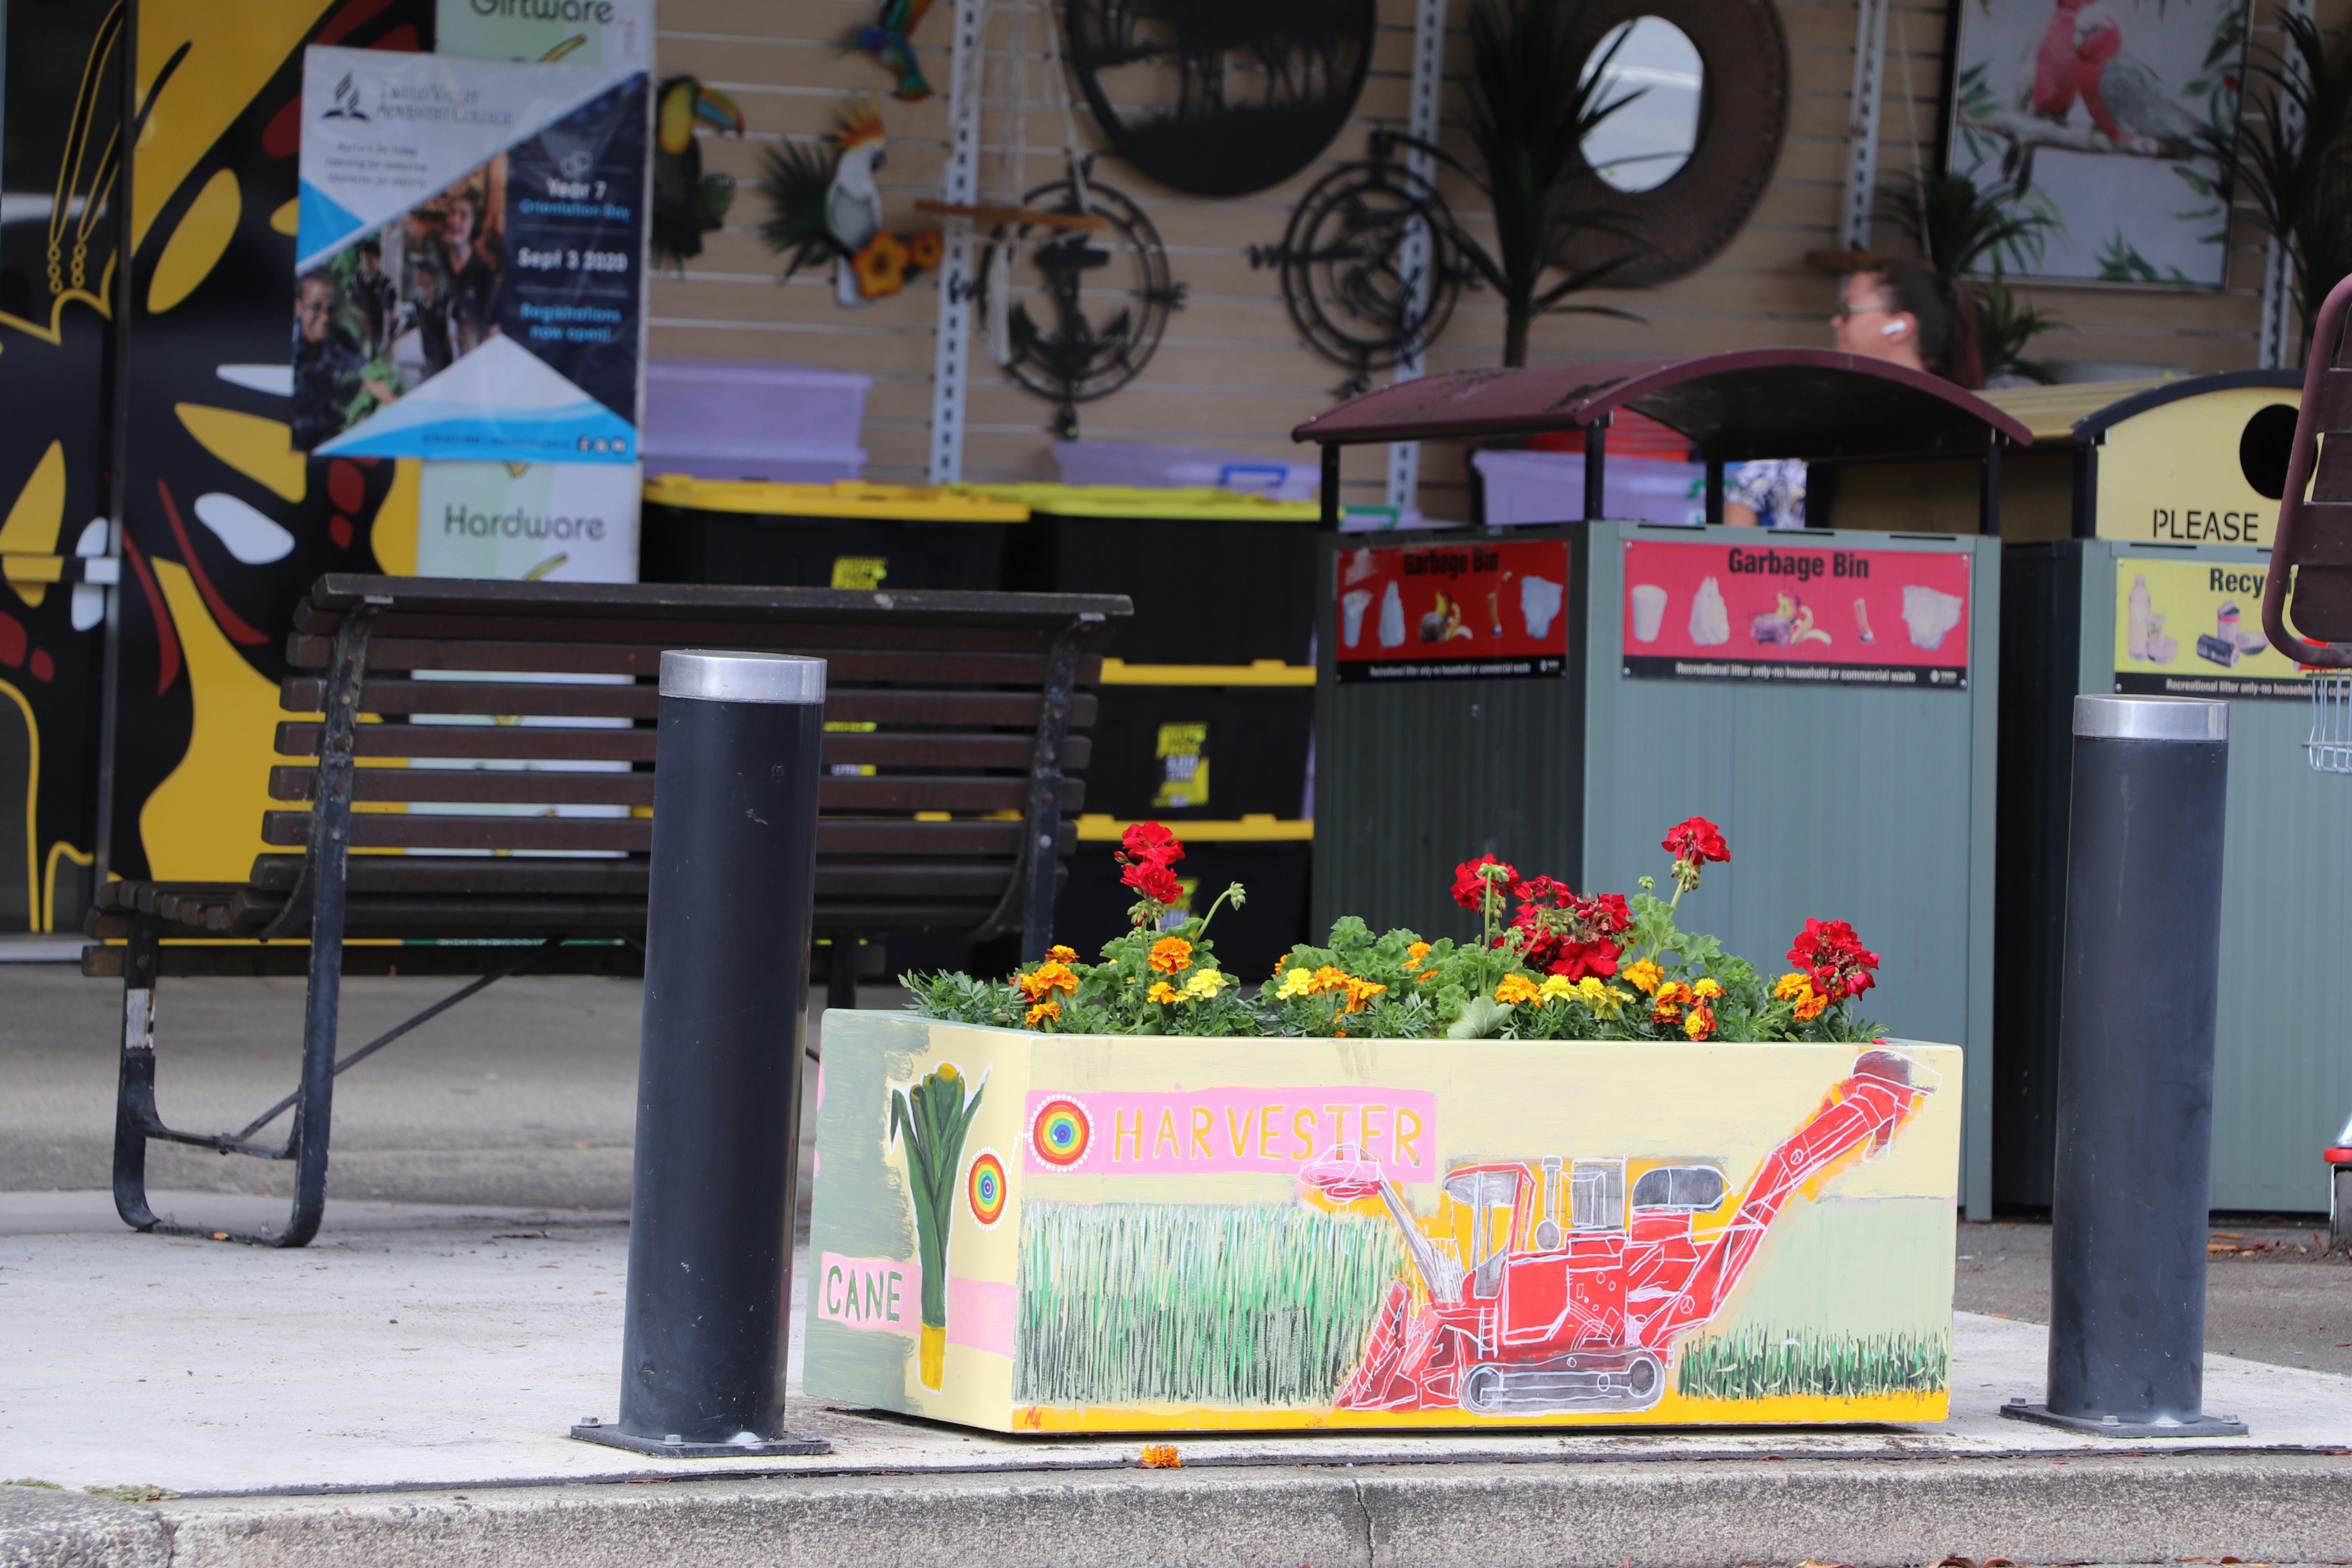 Mitch Schultz land themed planter box at Murwillumbah Street